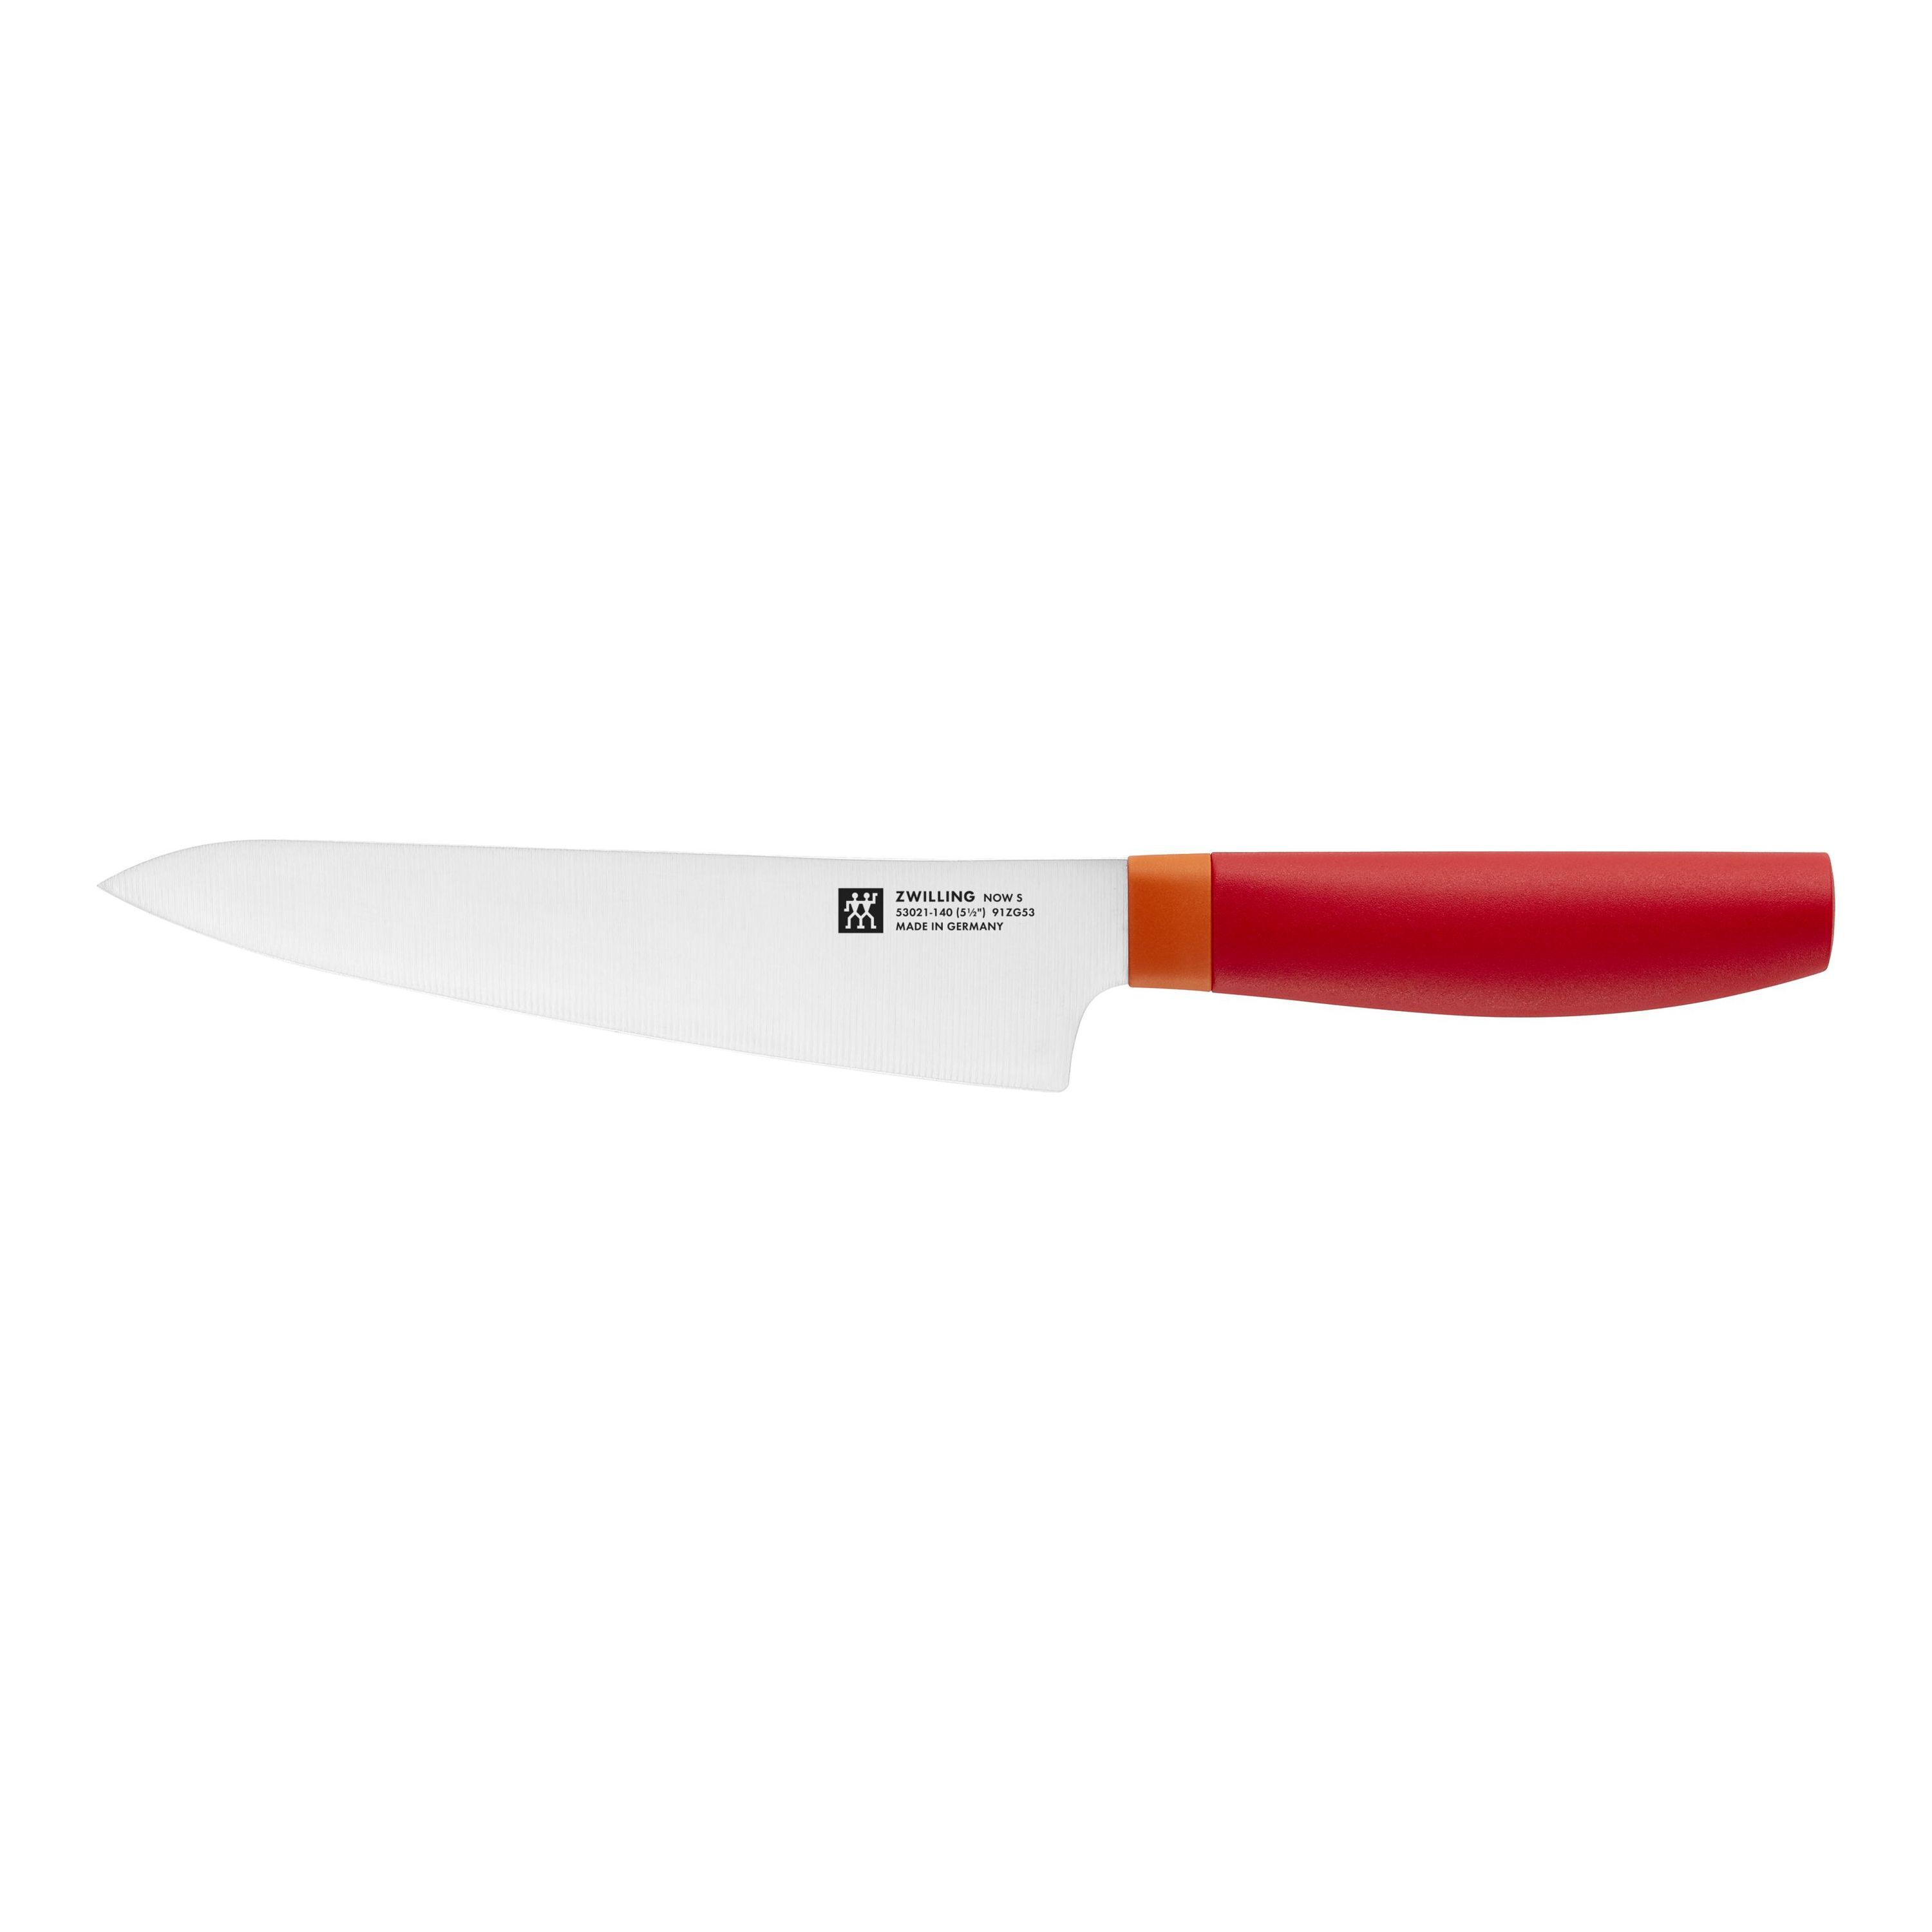 ZWILLING Now S Couteau de chef compact 14 cm, Rouge